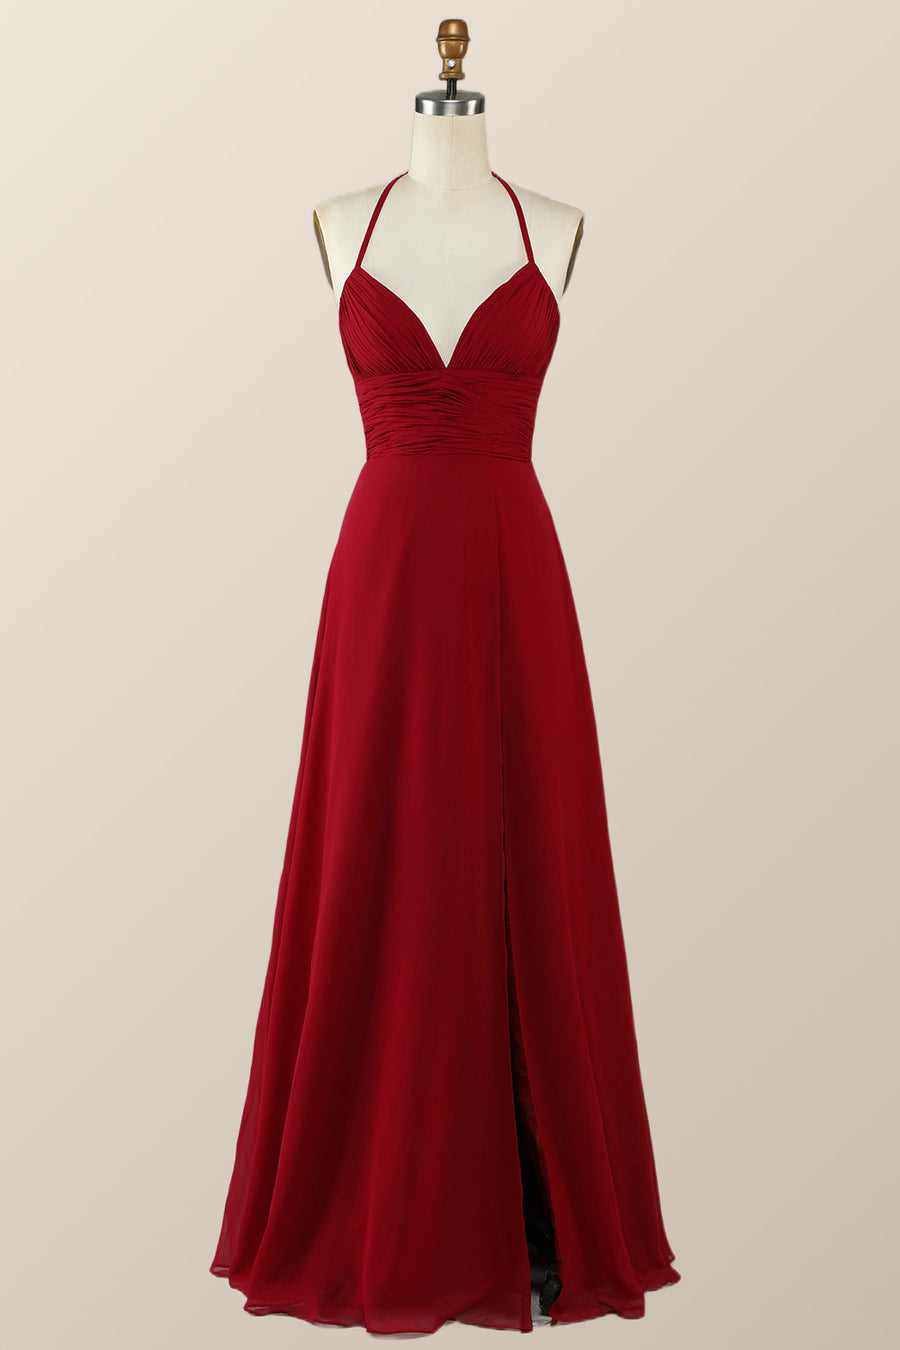 Halter Wine Red Empire A-line Long Bridesmaid Dress